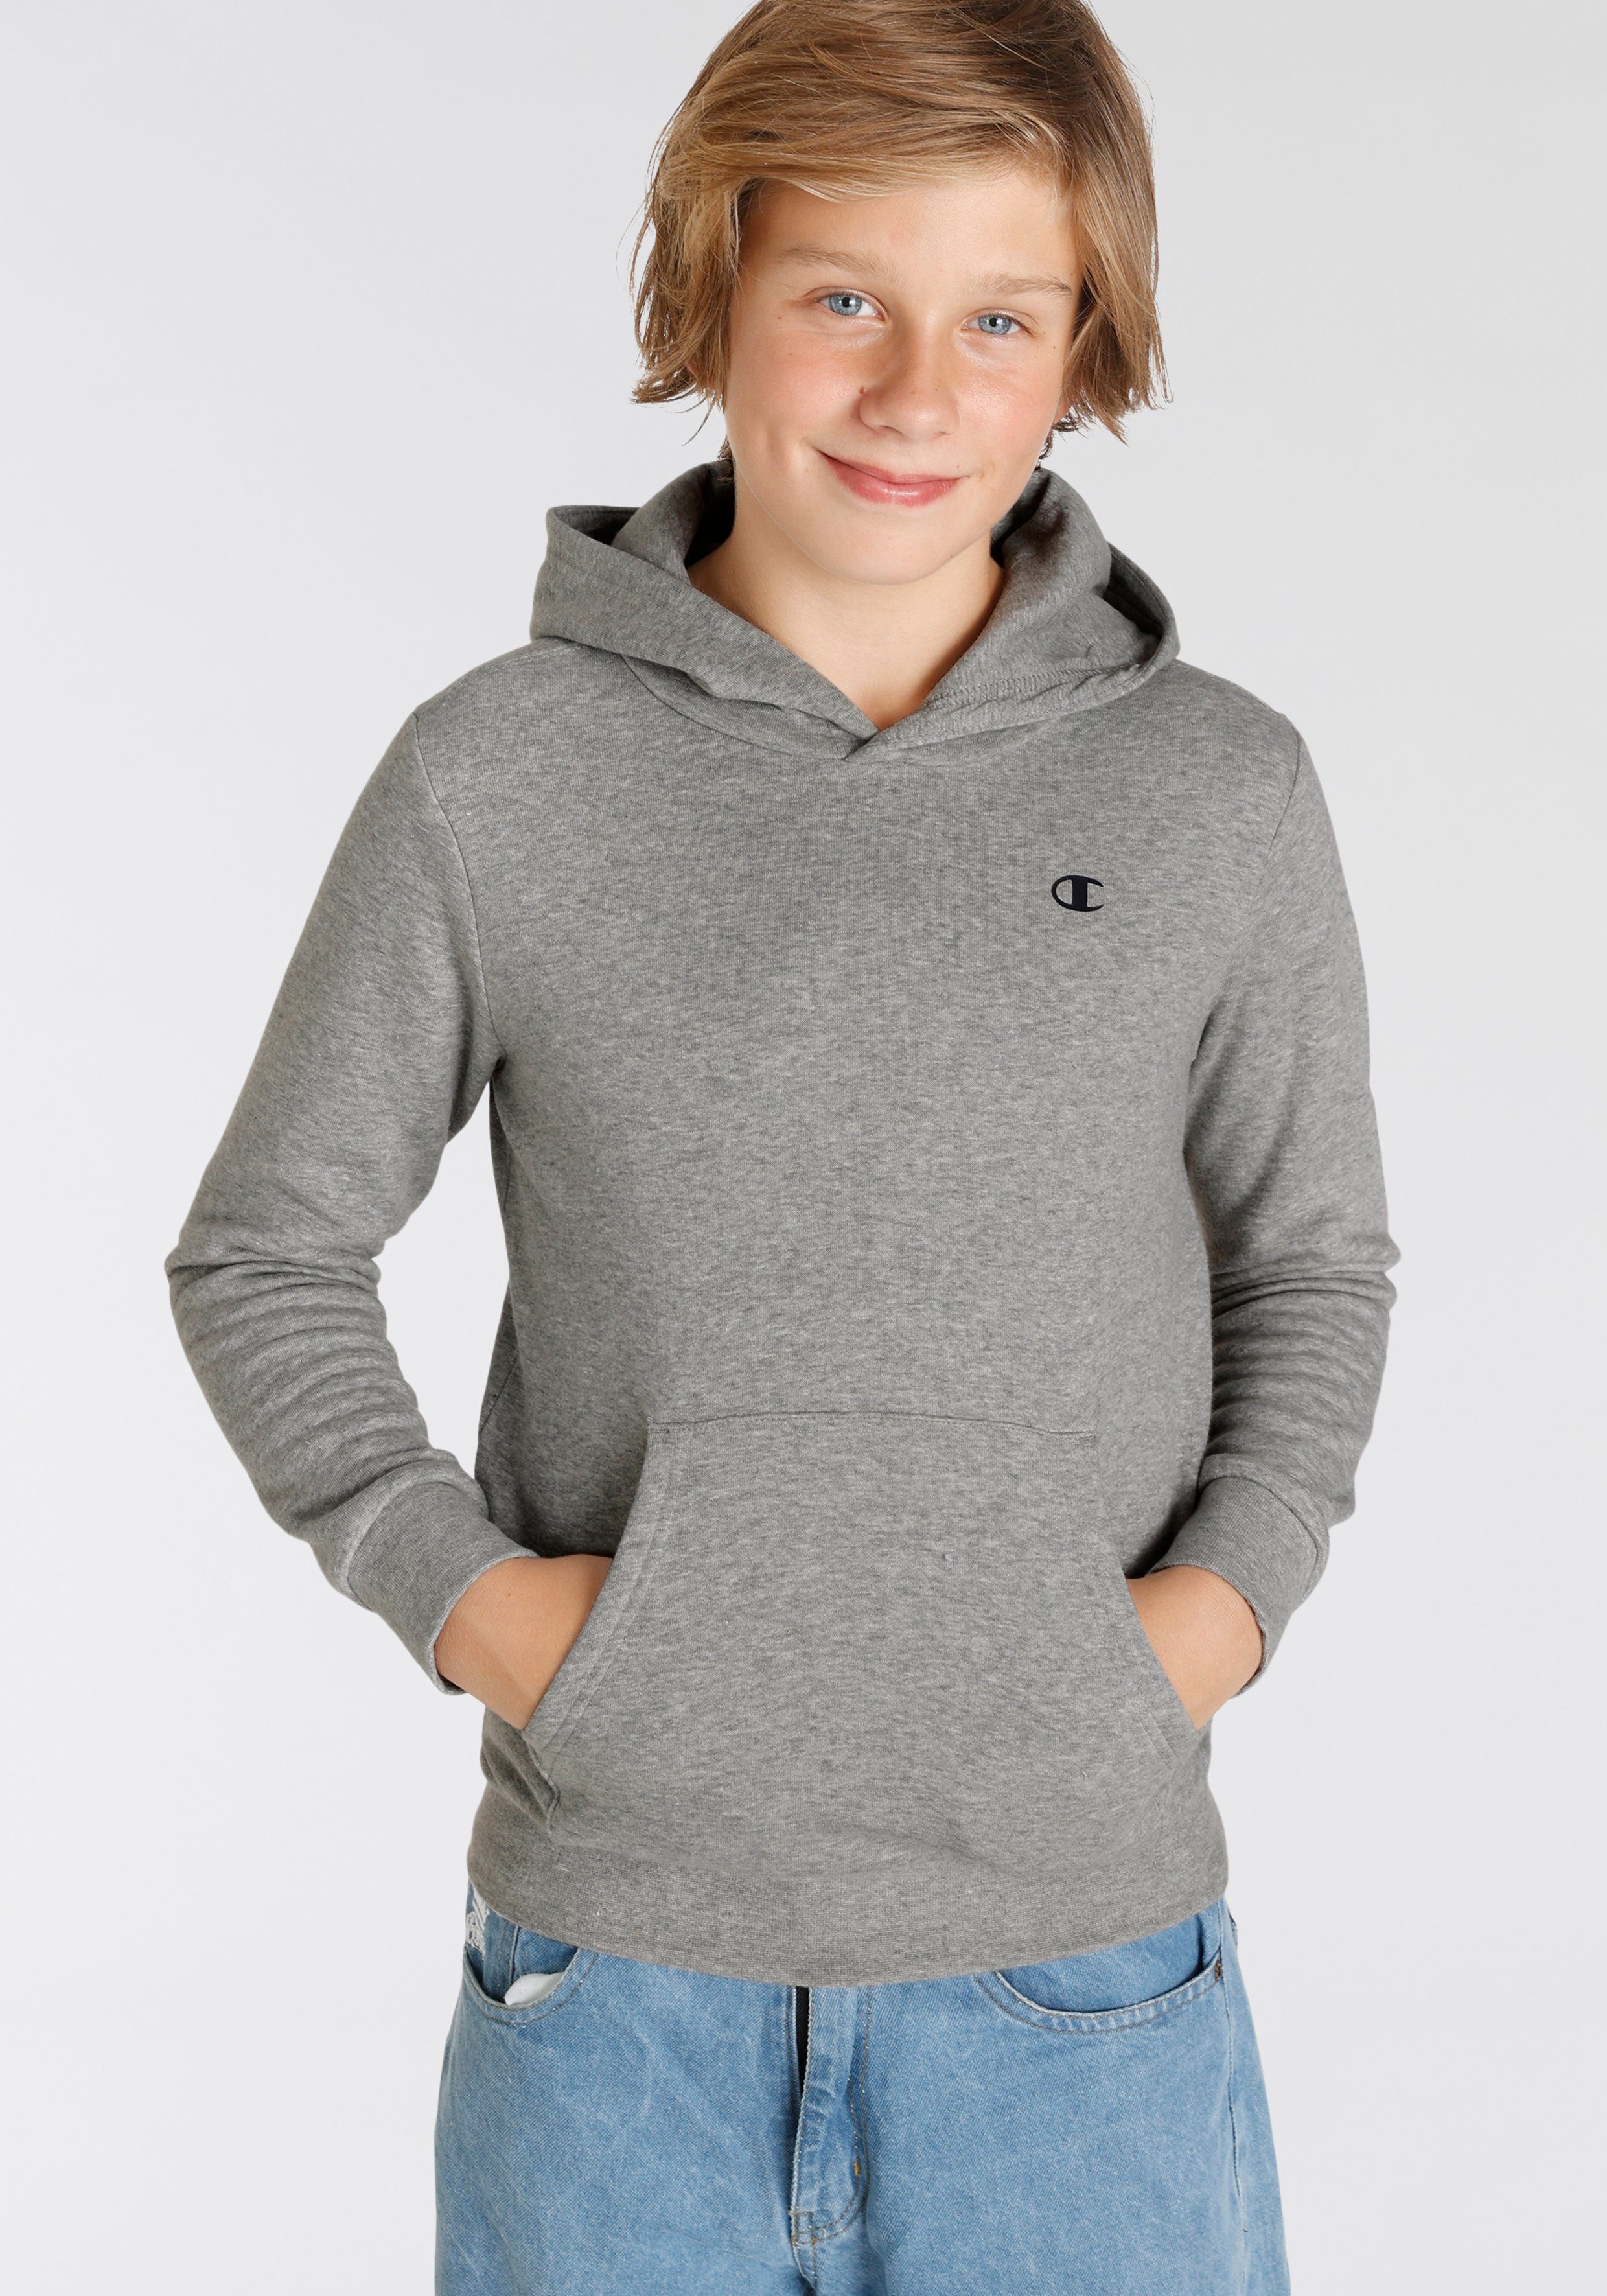 grau Hooded Kinder - Champion Sweatshirt Basic für Sweatshirt